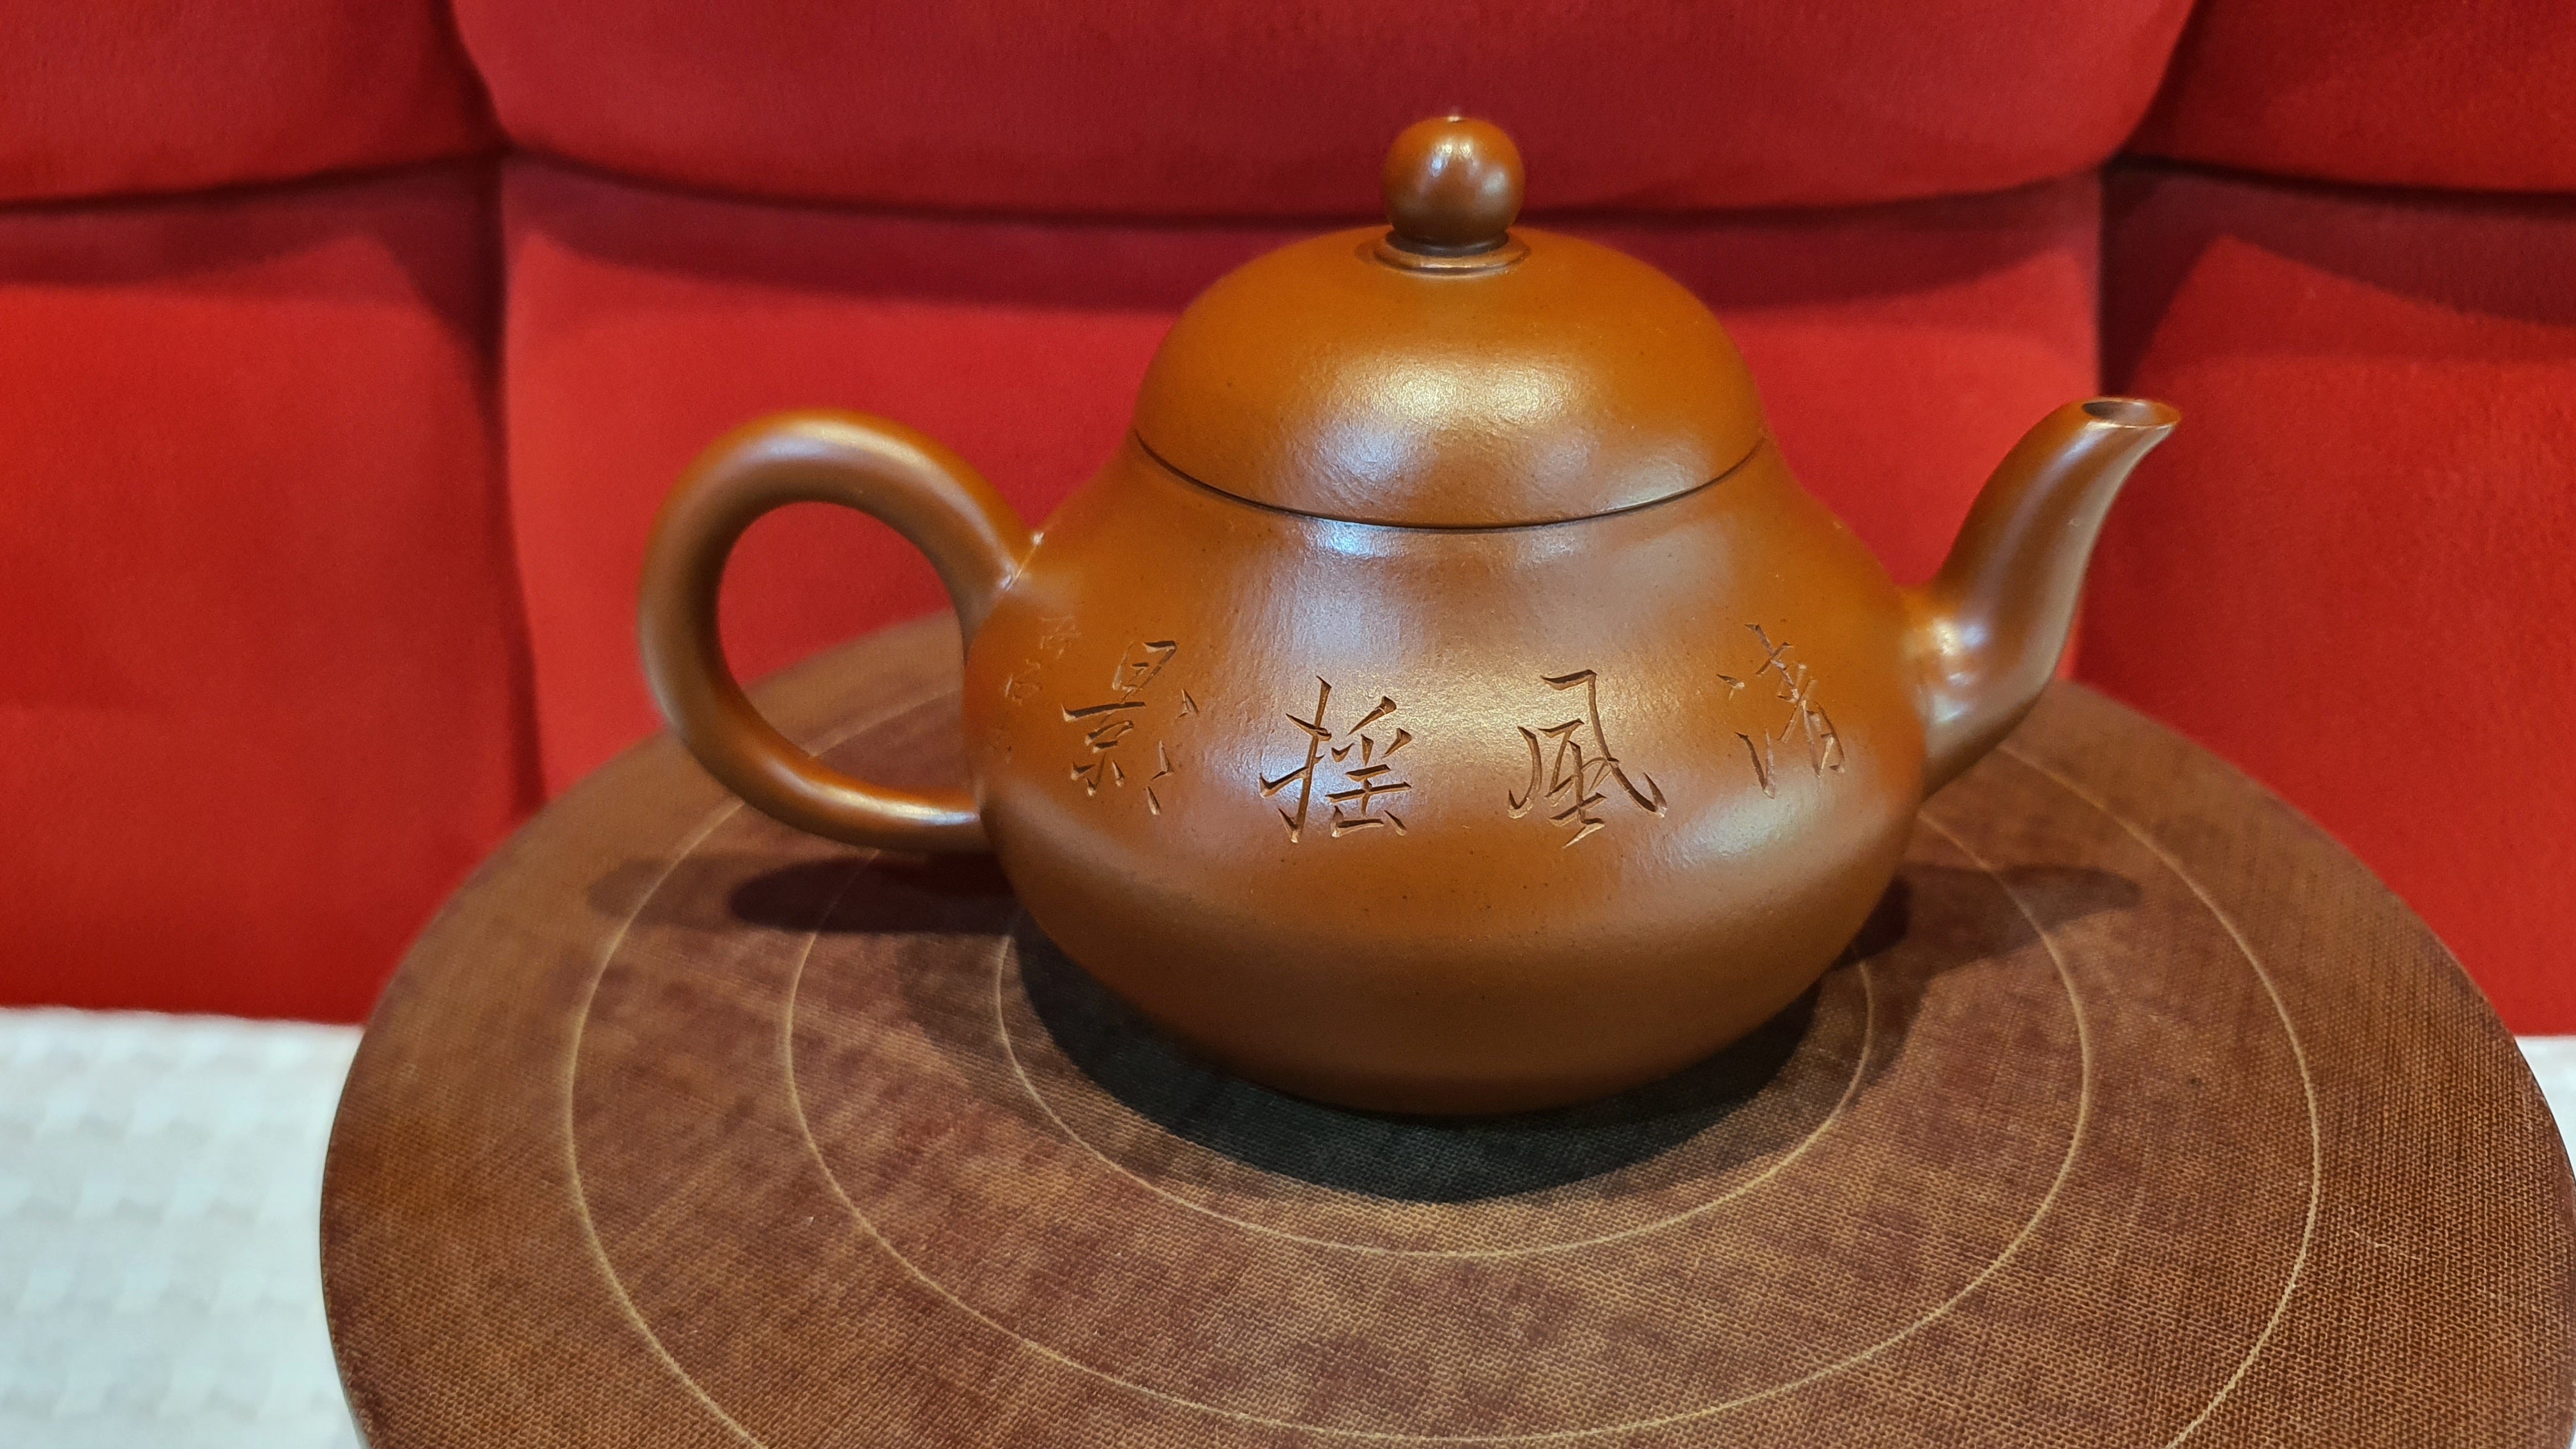 Li Xing 梨形, with Engraving (Bamboo) 带刻绘(竹), XiaoMeiYao ZhuNi 小煤窑朱泥, 140ml, made by Craftslady Xu Quan Fang 许全芳。